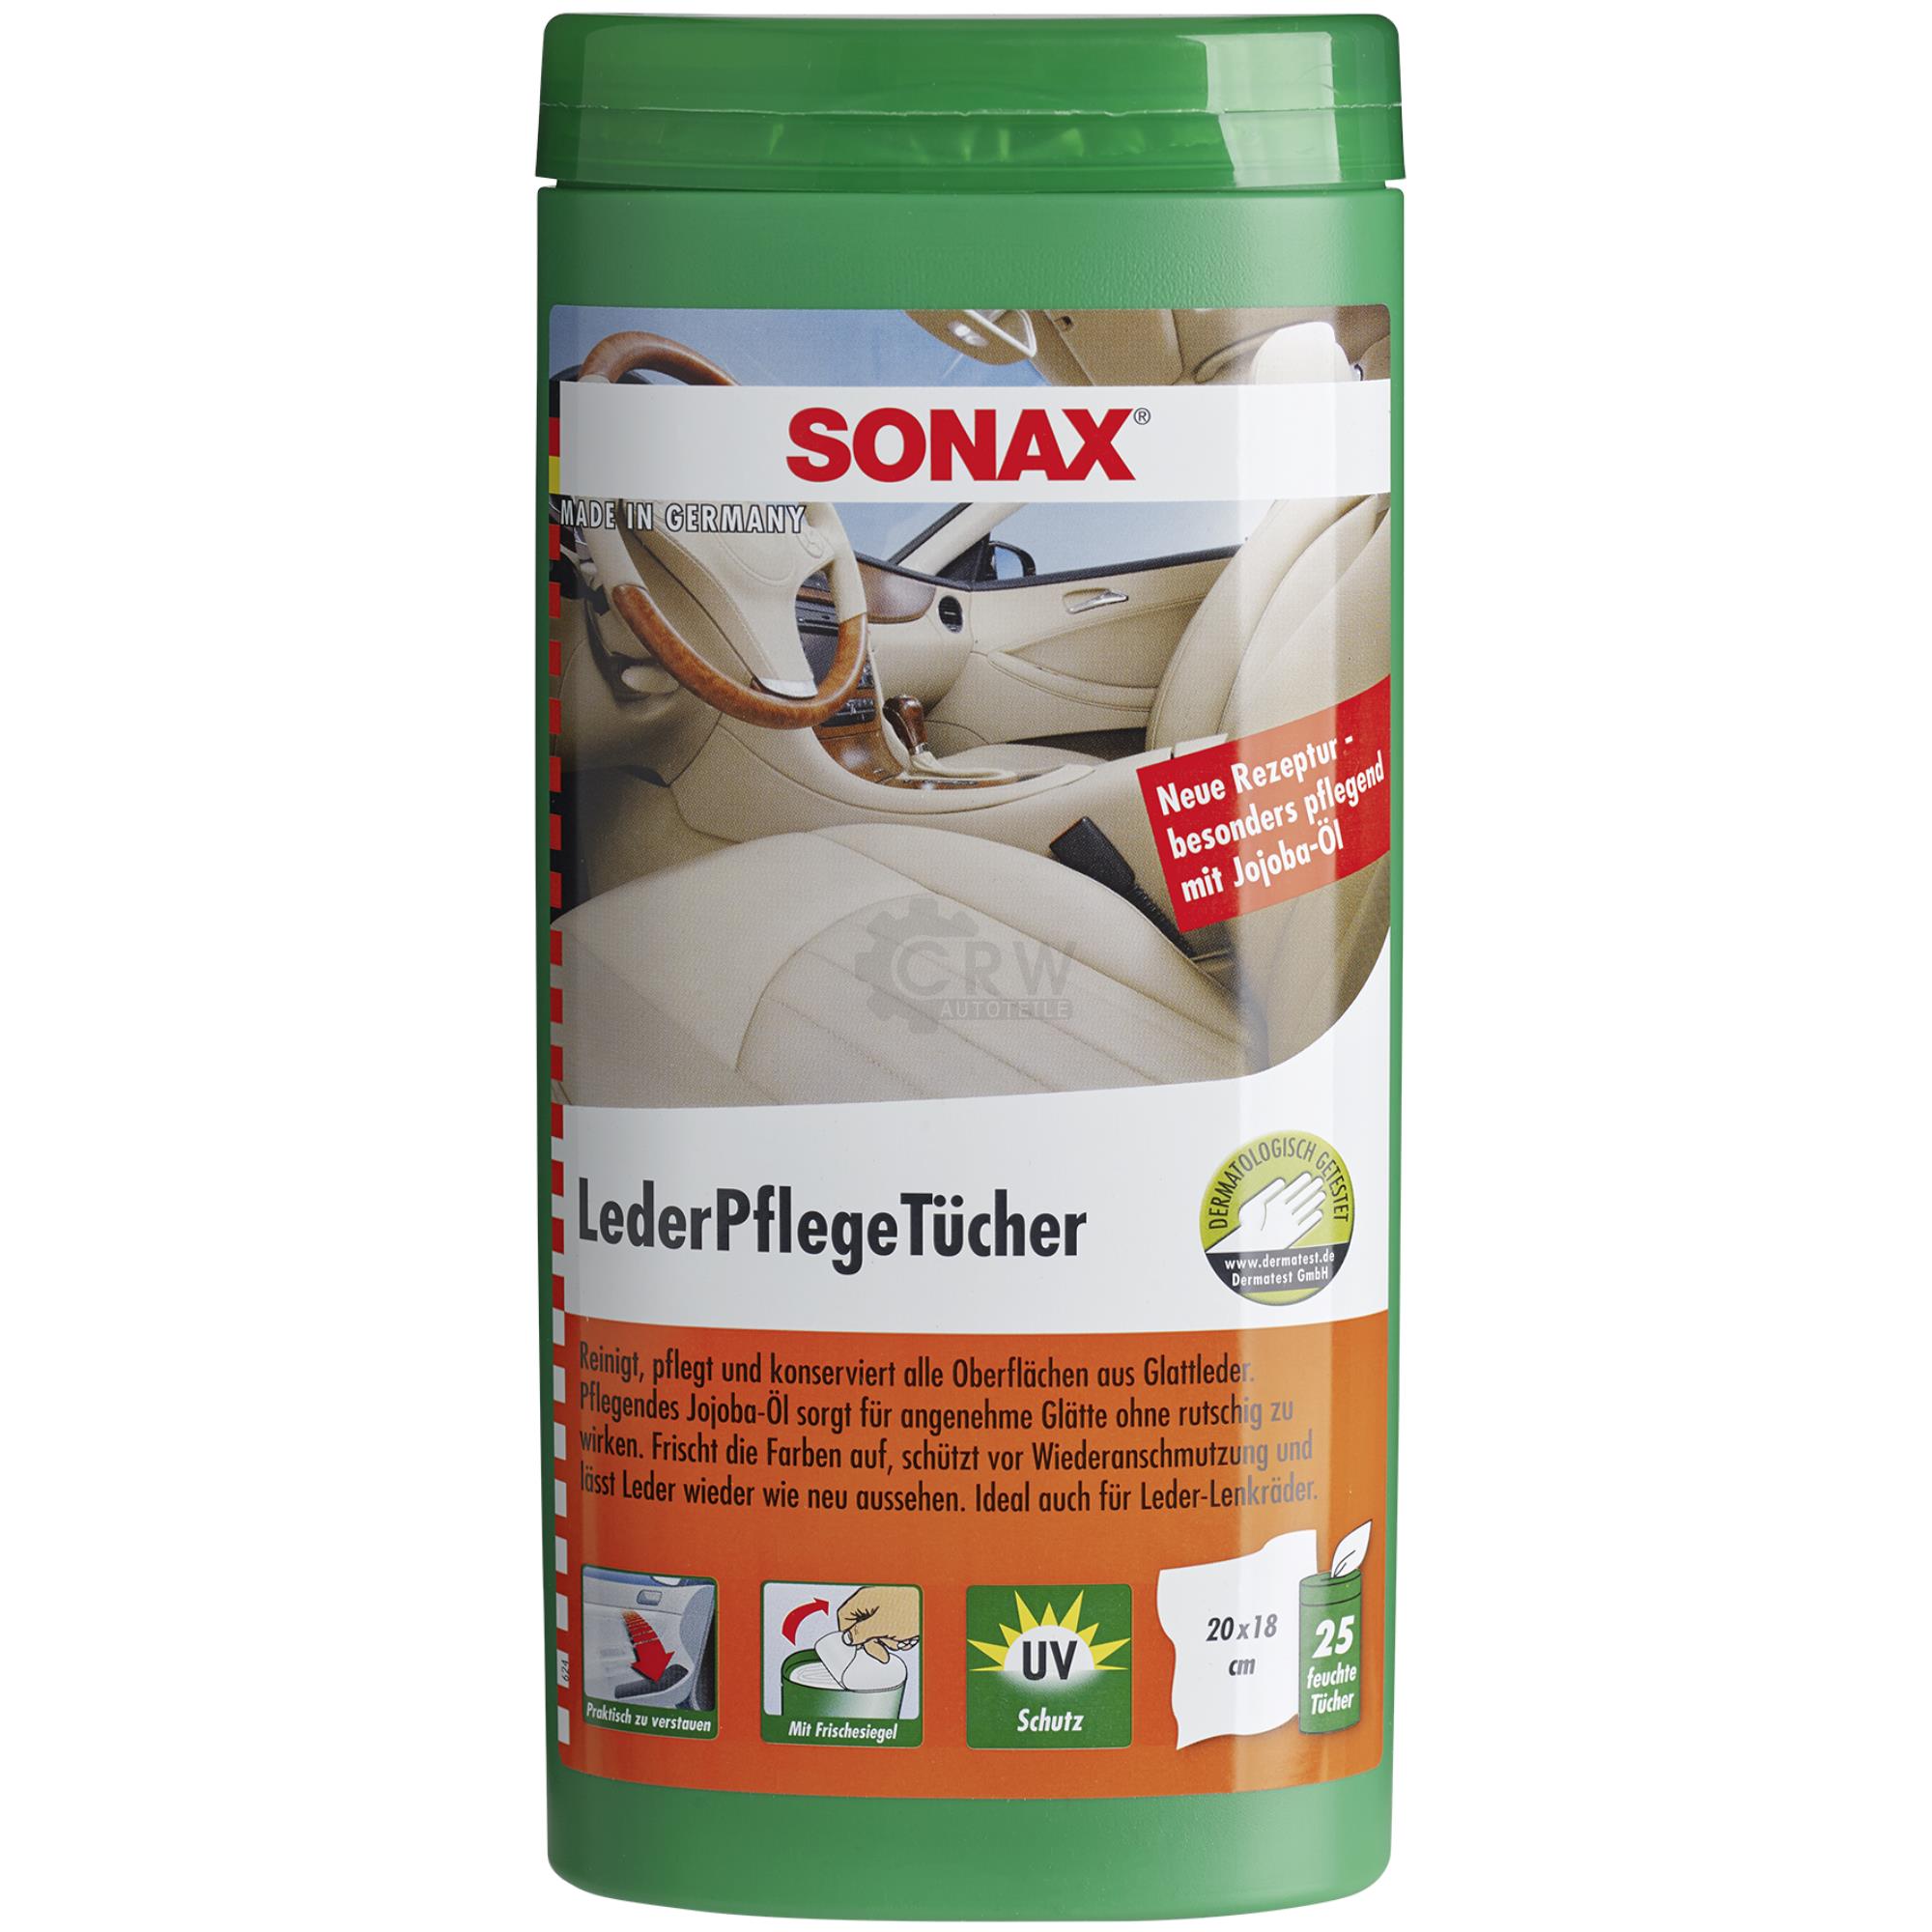 SONAX 04123000 LederPflegeTücher Box Auto Innenraum Pflege Lederpflege